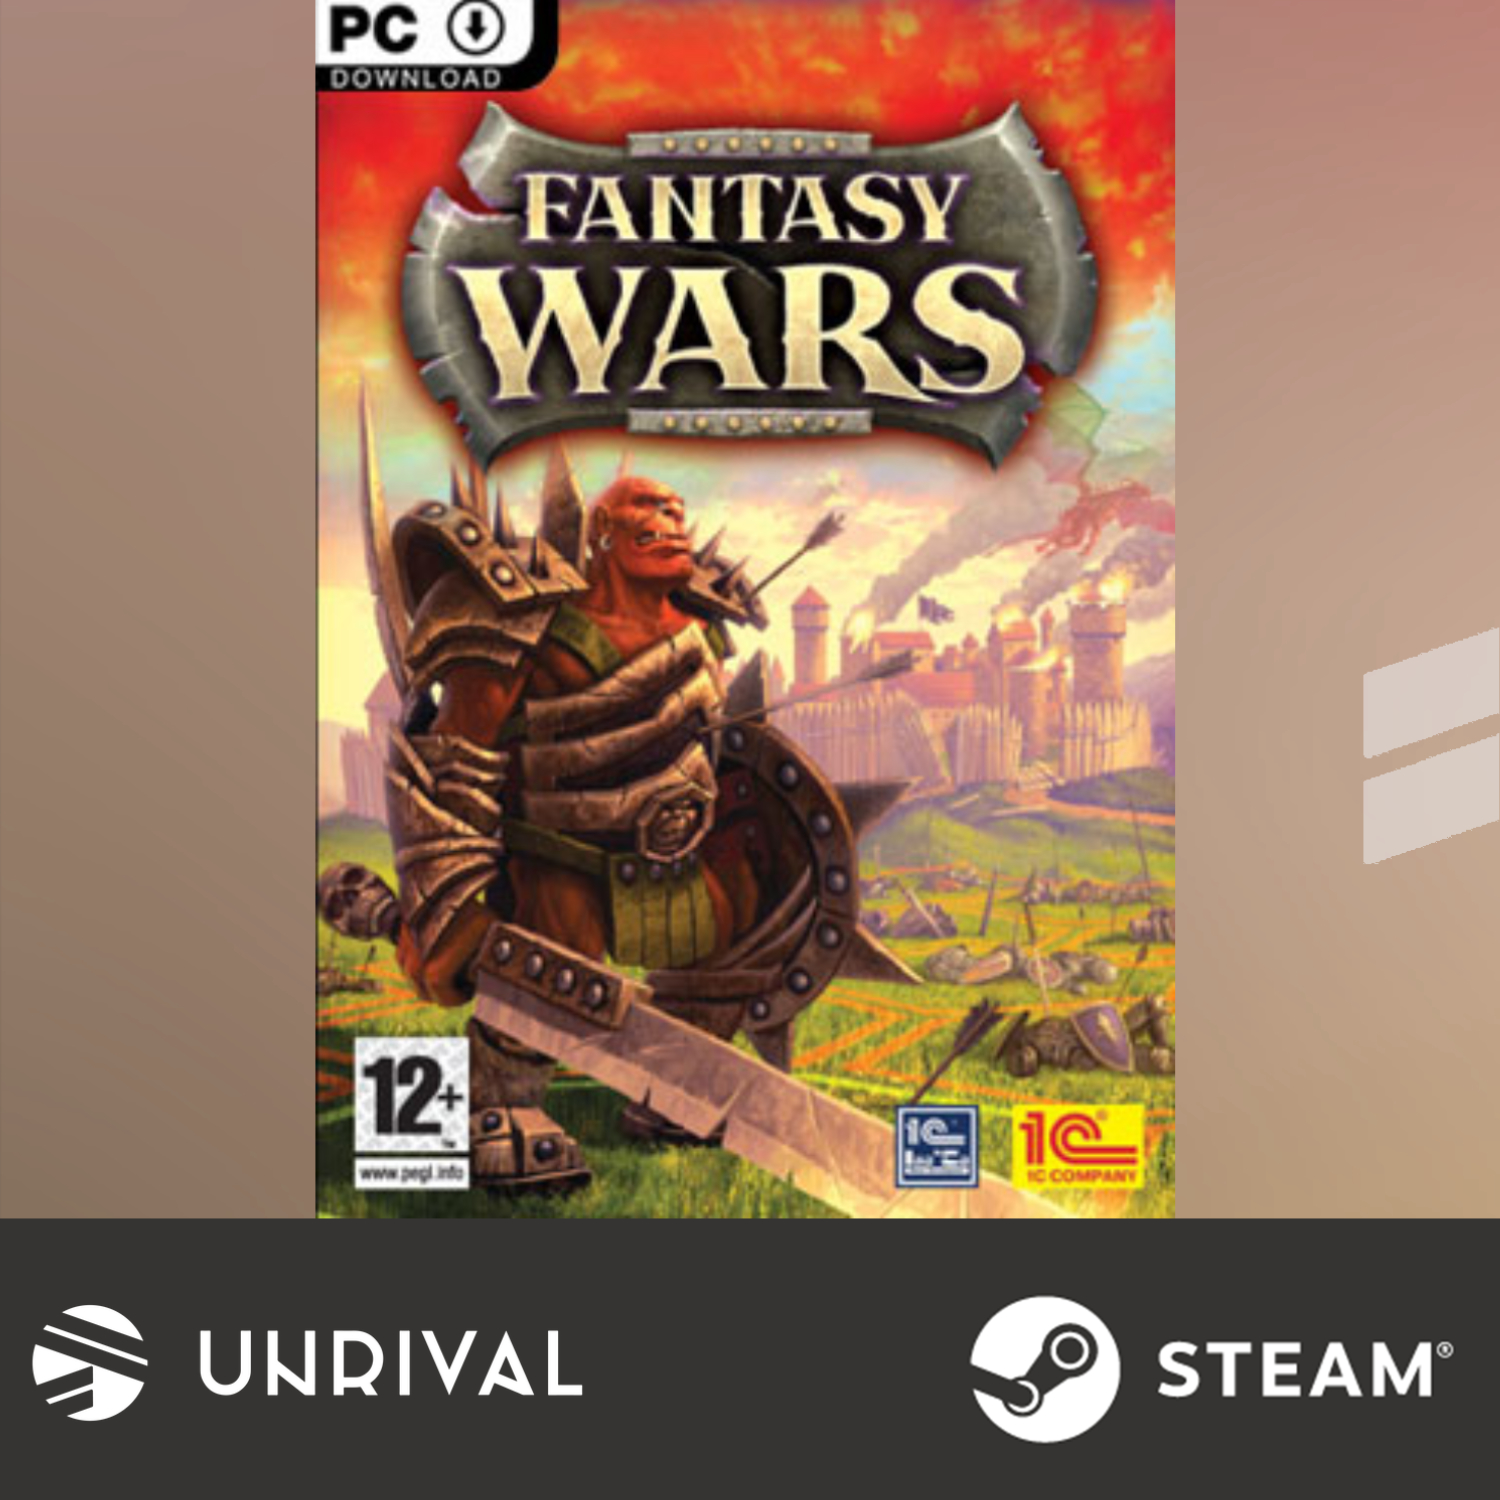 Fantasy Wars PC Digital Download Game (Multiplayer) - Unrival